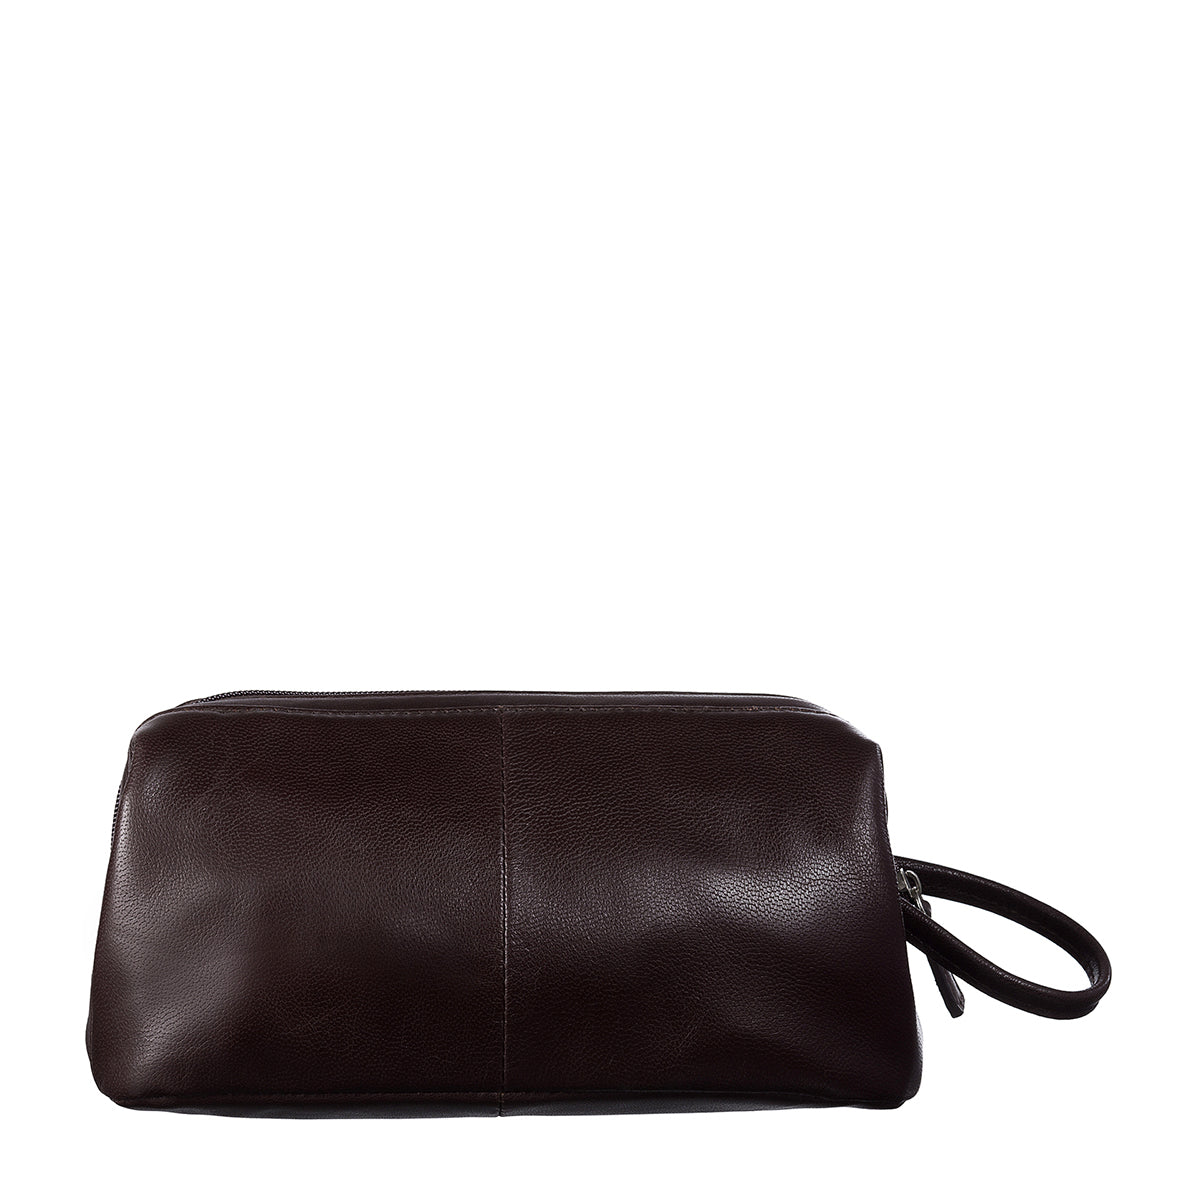 EnzoDesign Brown Cowhide Leather Toiletry Bag